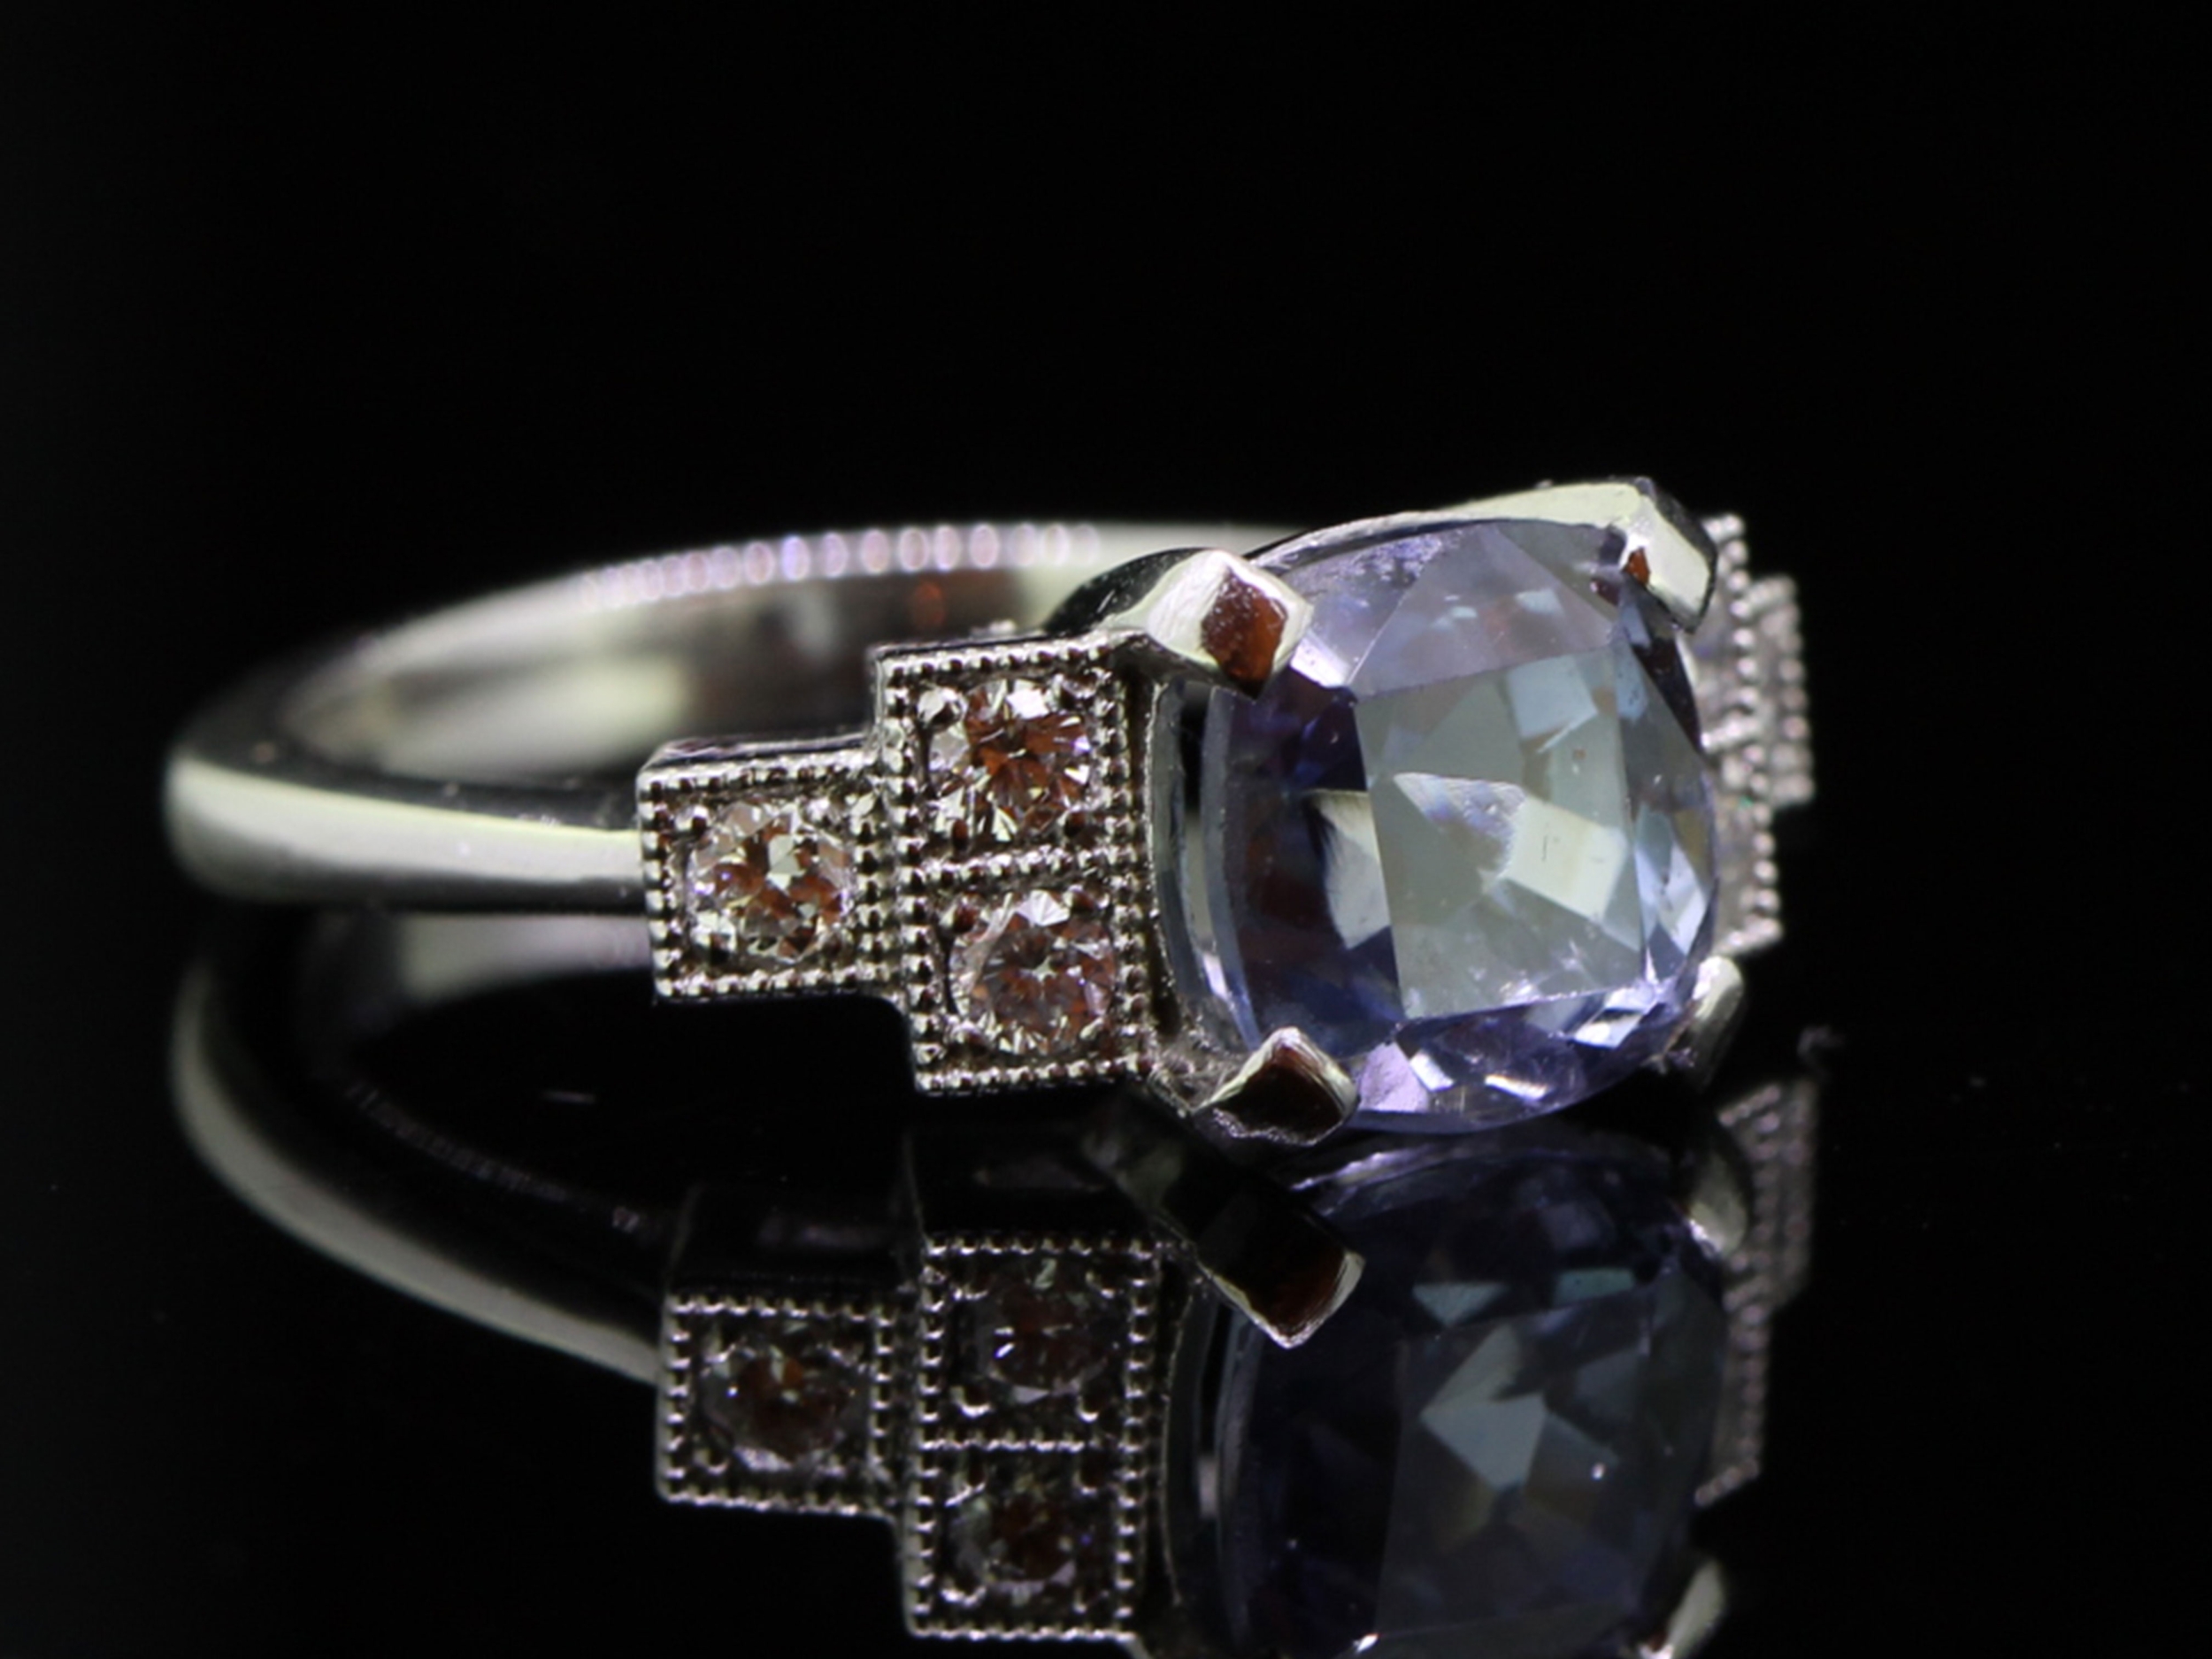 Natural Blue 4.52 Carat Sapphire and Diamond Platinum Ring With Cert 